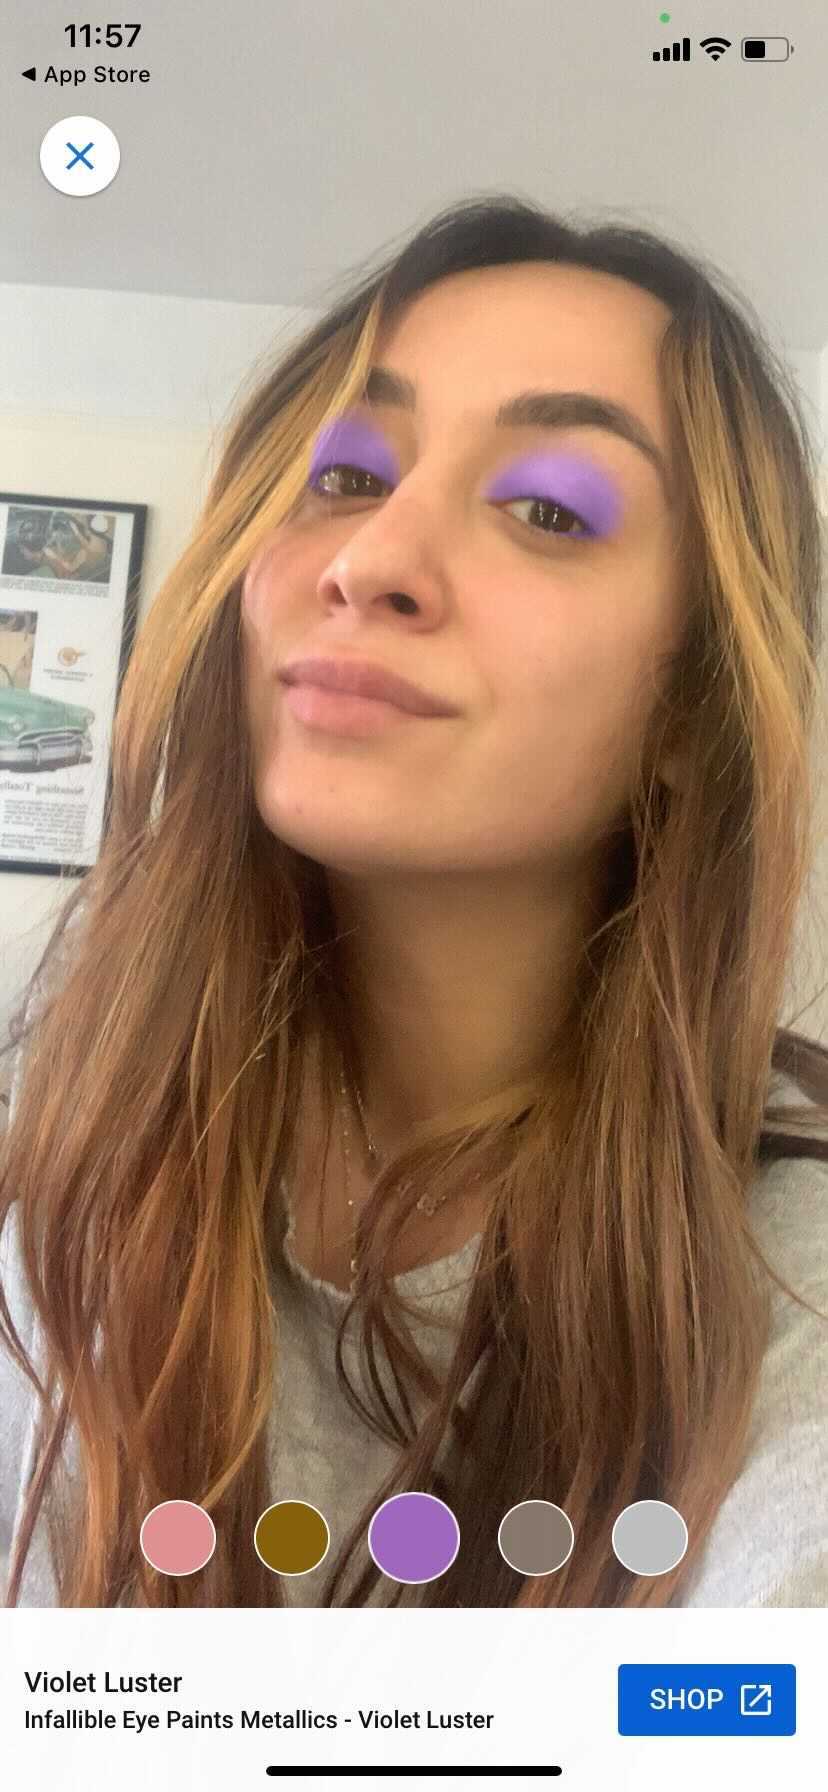 Commerce writer Angela Trakoshis trying on a purple eye shadow.